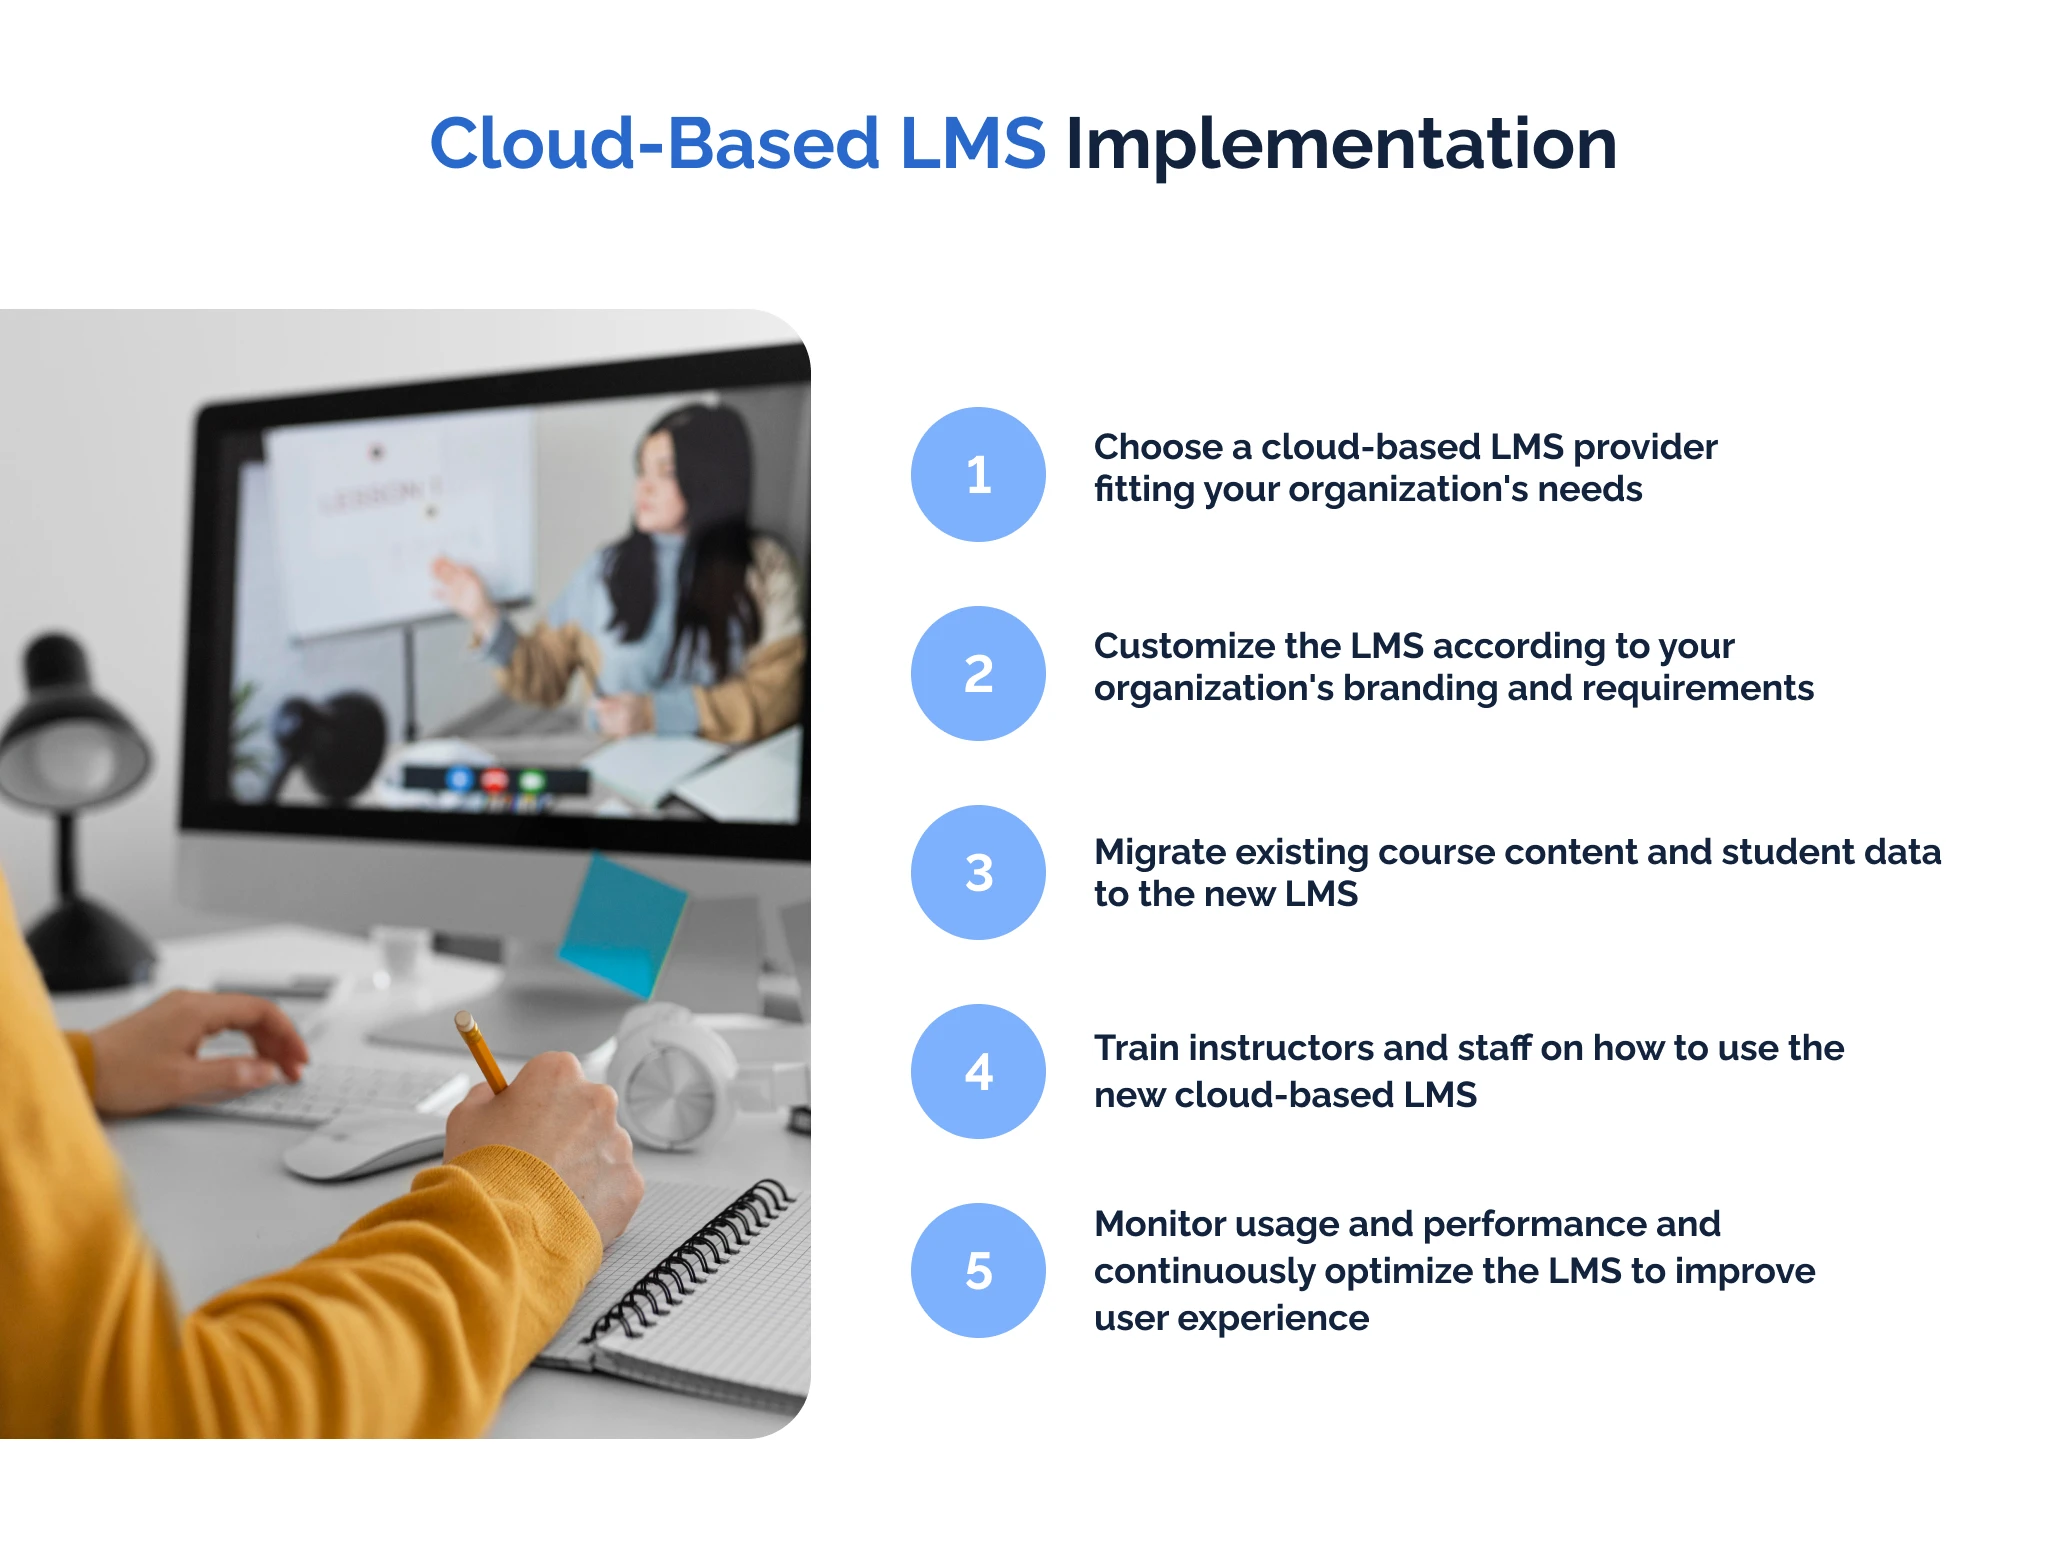 Cloud-based LMS implementation